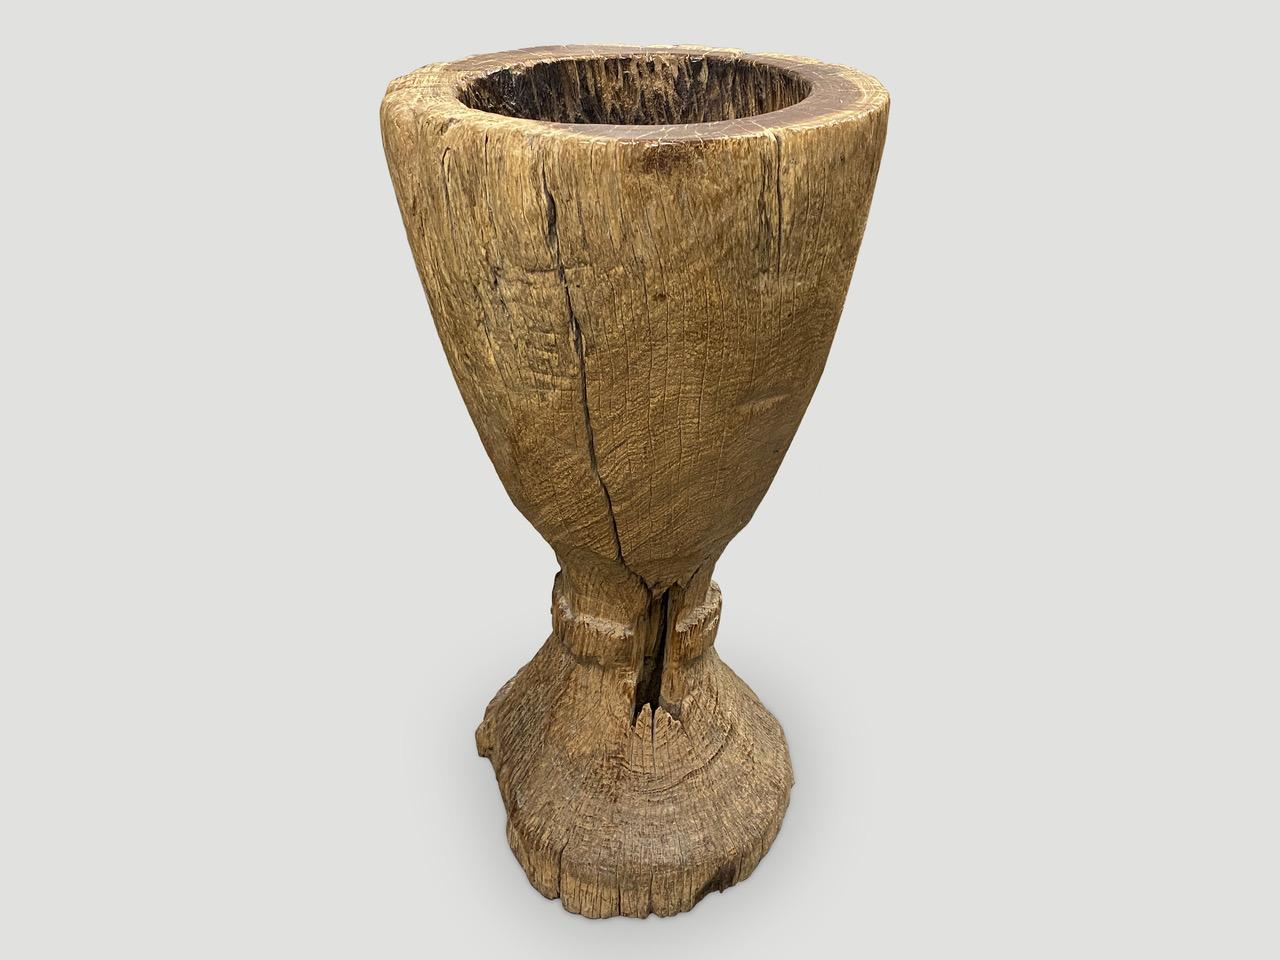 Wood Andrianna Shamaris Sculptural Vessel For Sale